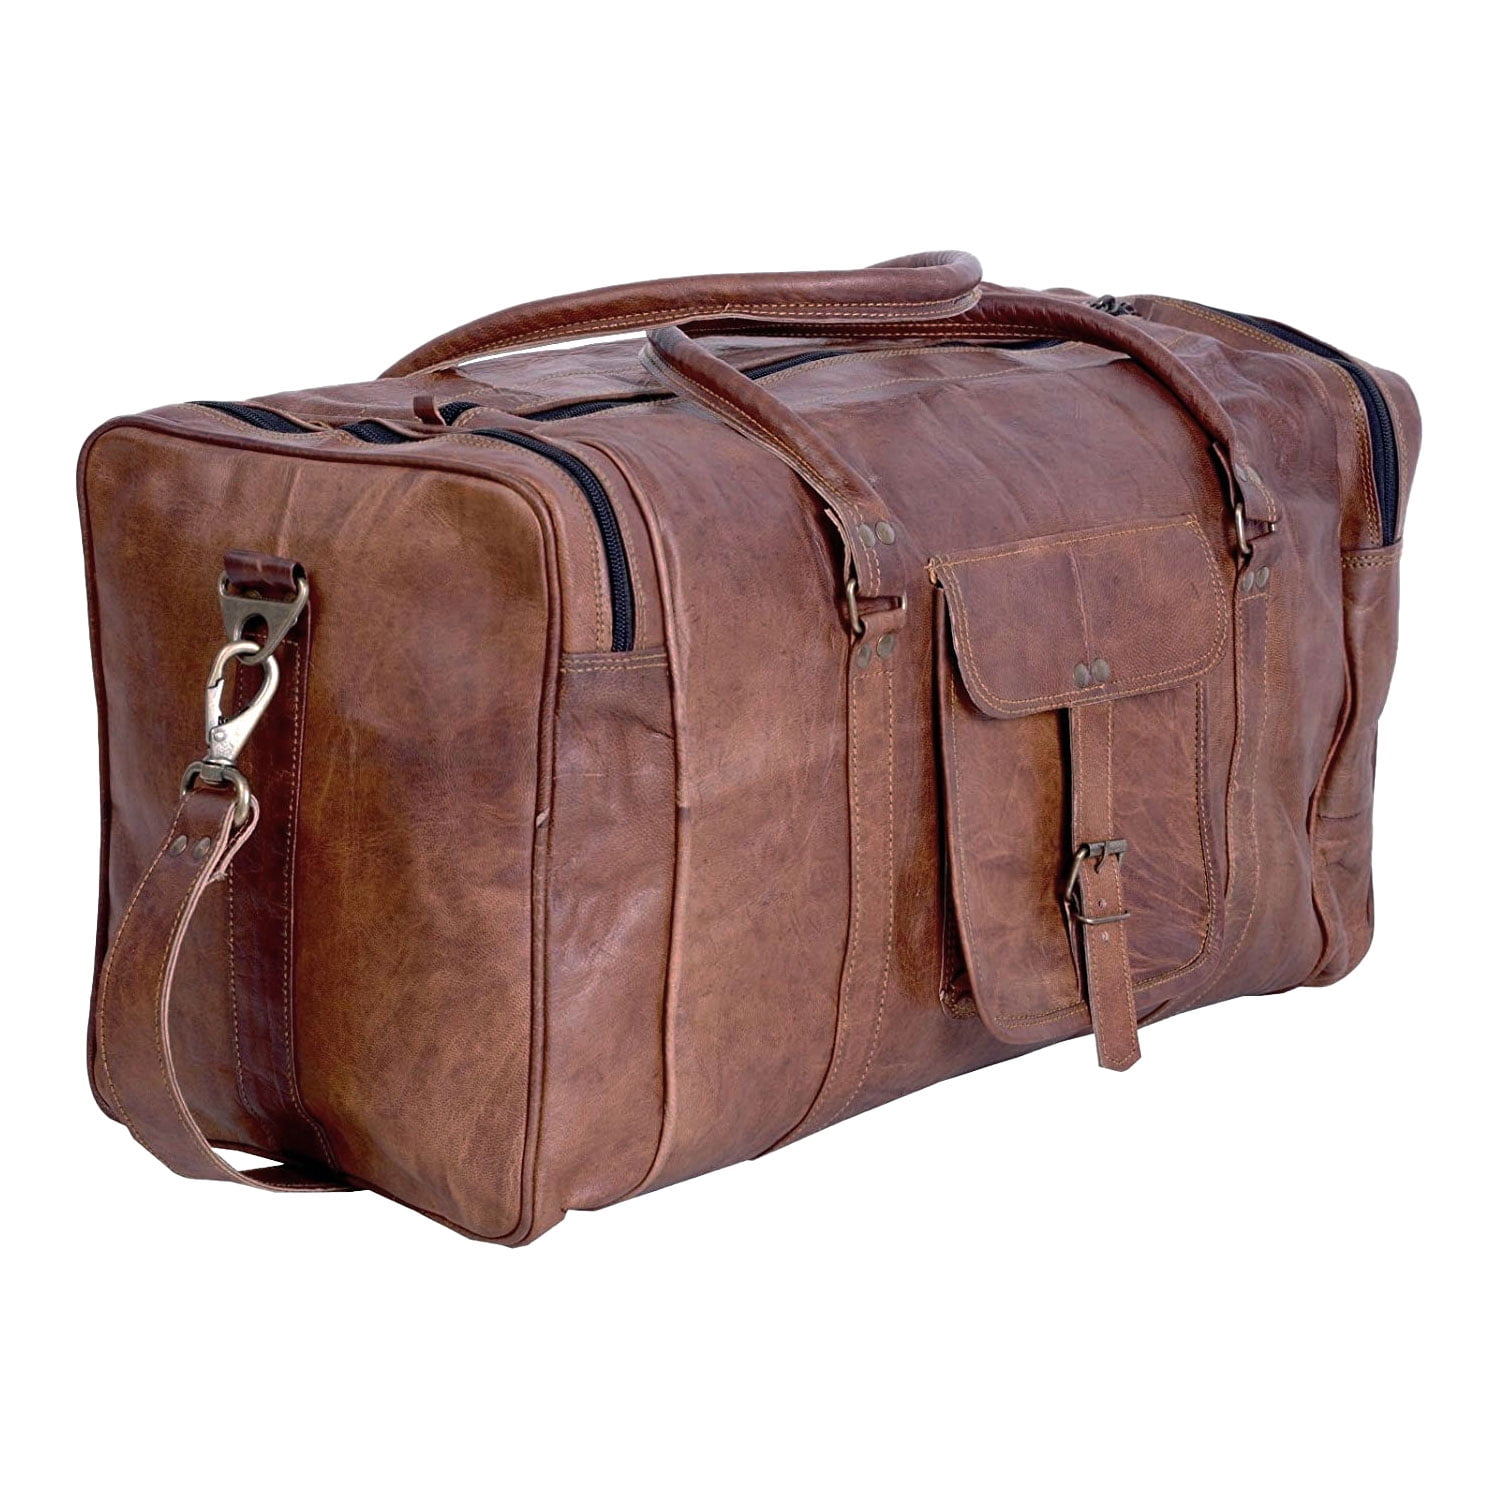 Men's genuine Leather 30" large vintage duffle travel gym weekend overnight bag